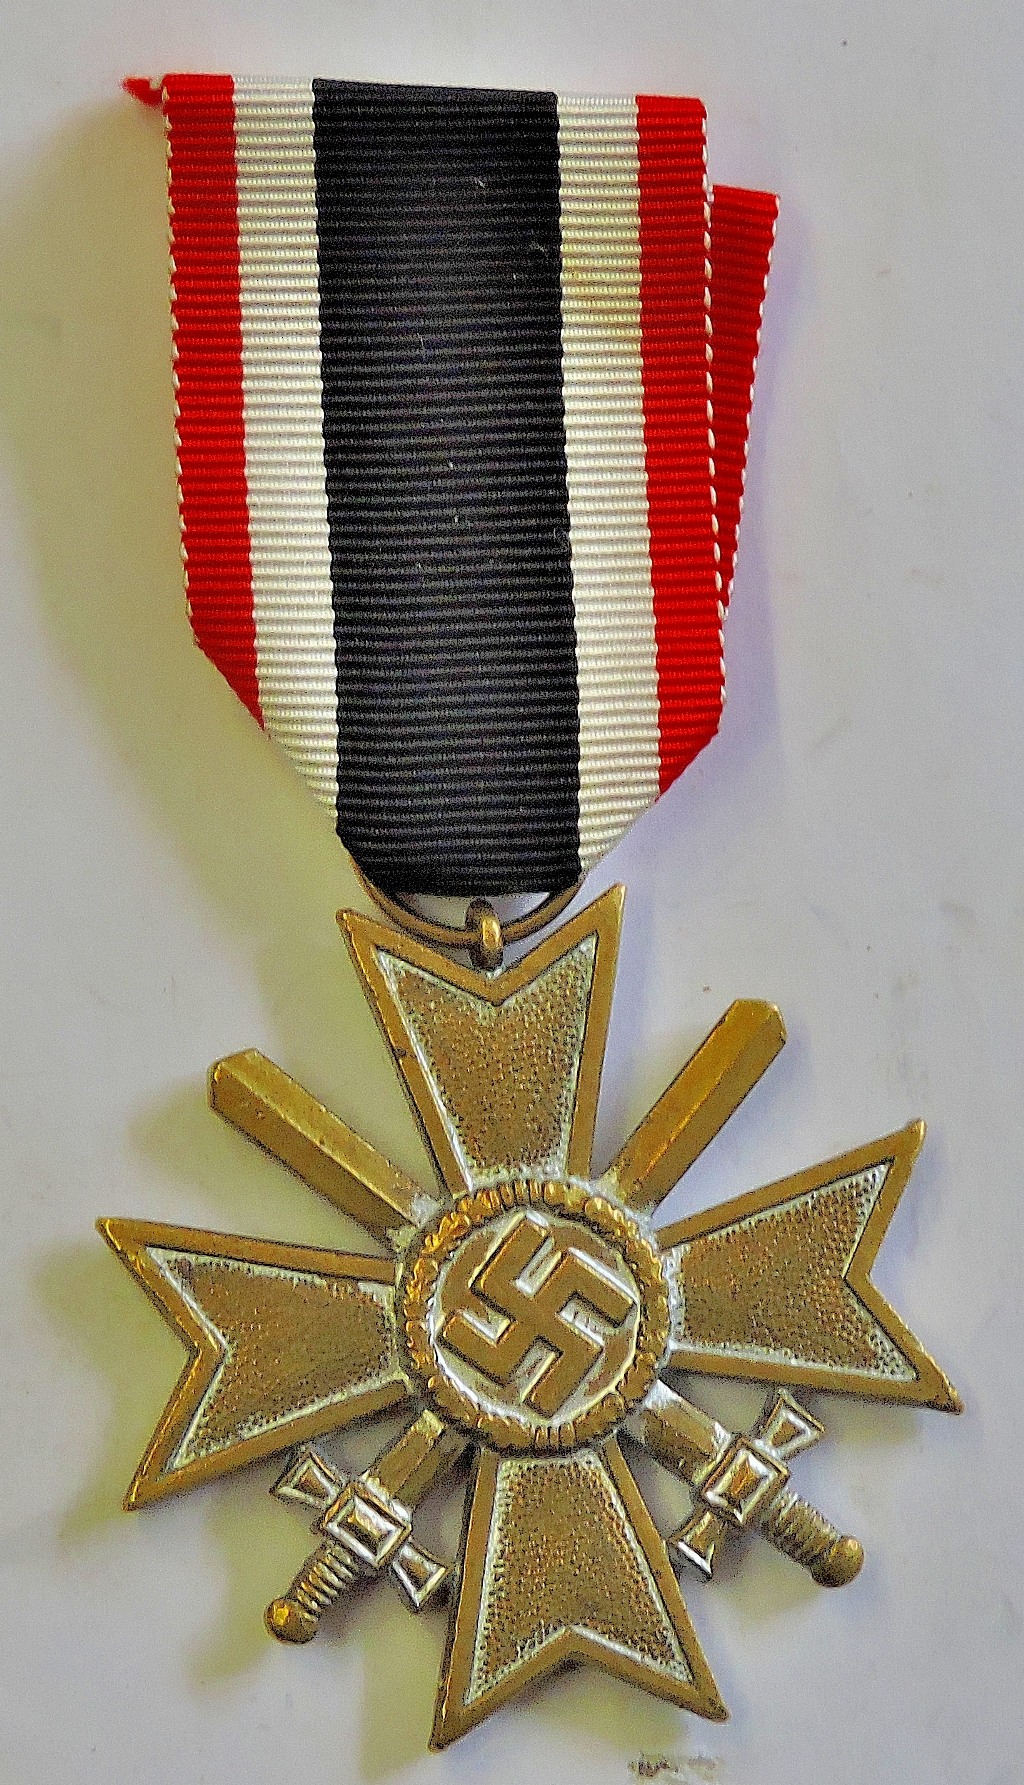 German War Cross Merit (Kriegsverdienstkreuz) 2nd Class with crossed swords, some wear to the